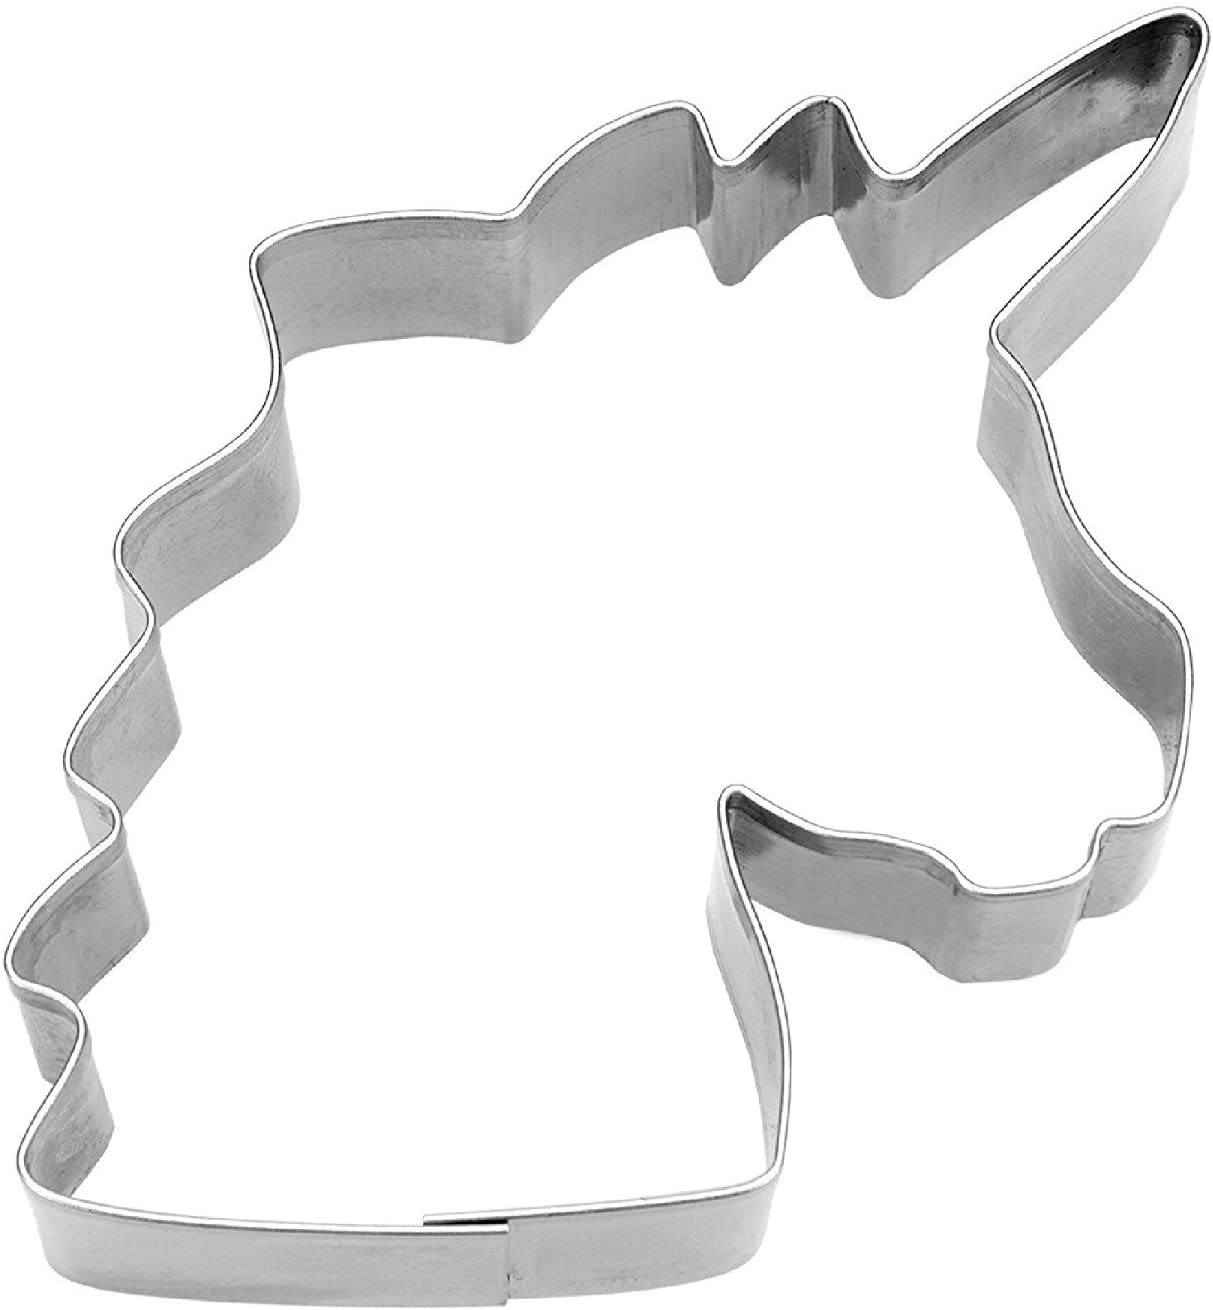 Staedter Städter Unicorn Cookie Cutter Stainless Steel in Silver, 8 cm